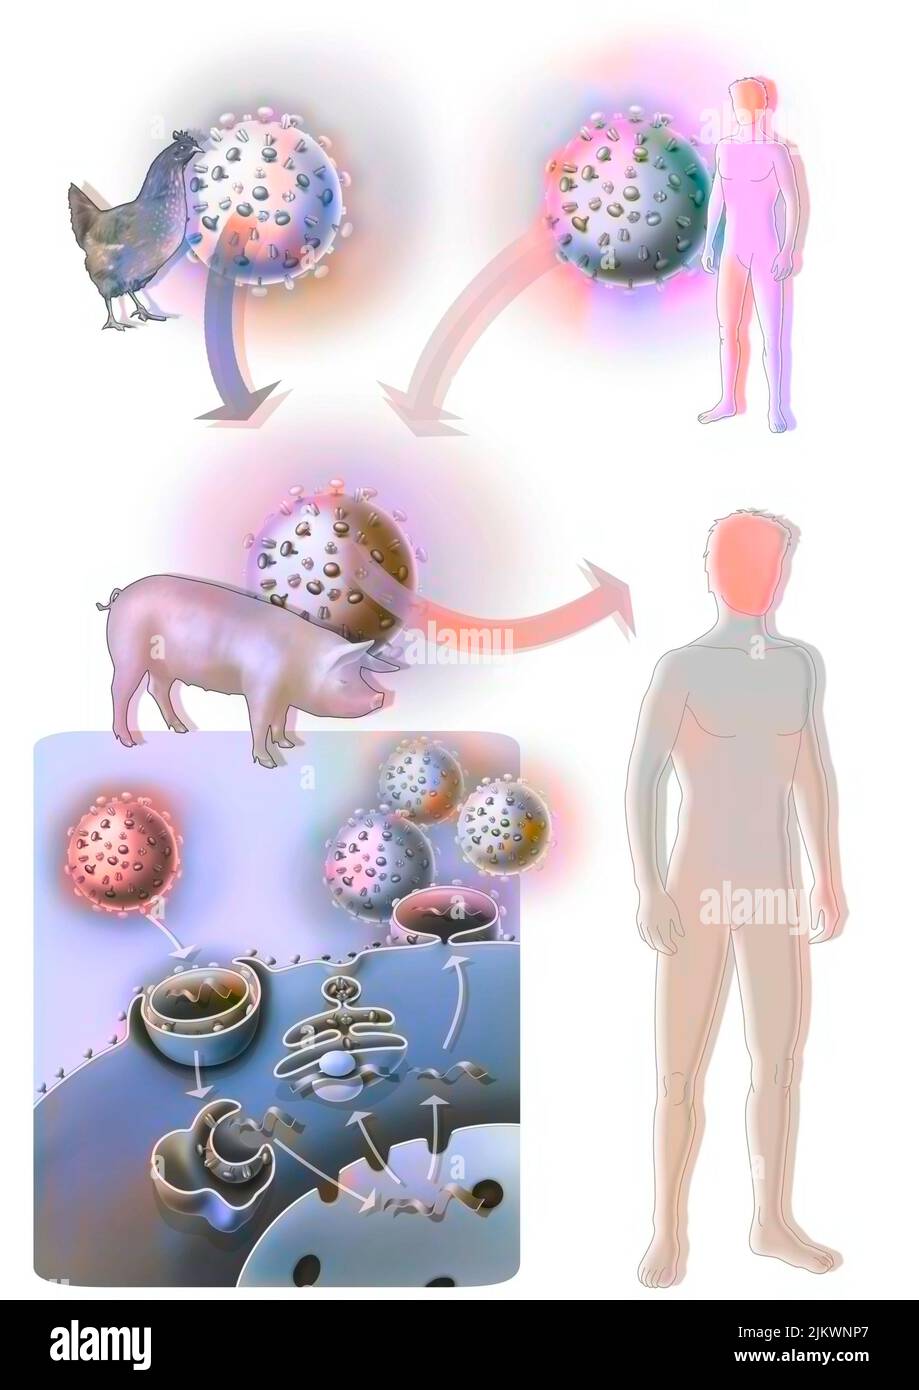 The suspected origin of swine flu or influenza A. Stock Photo